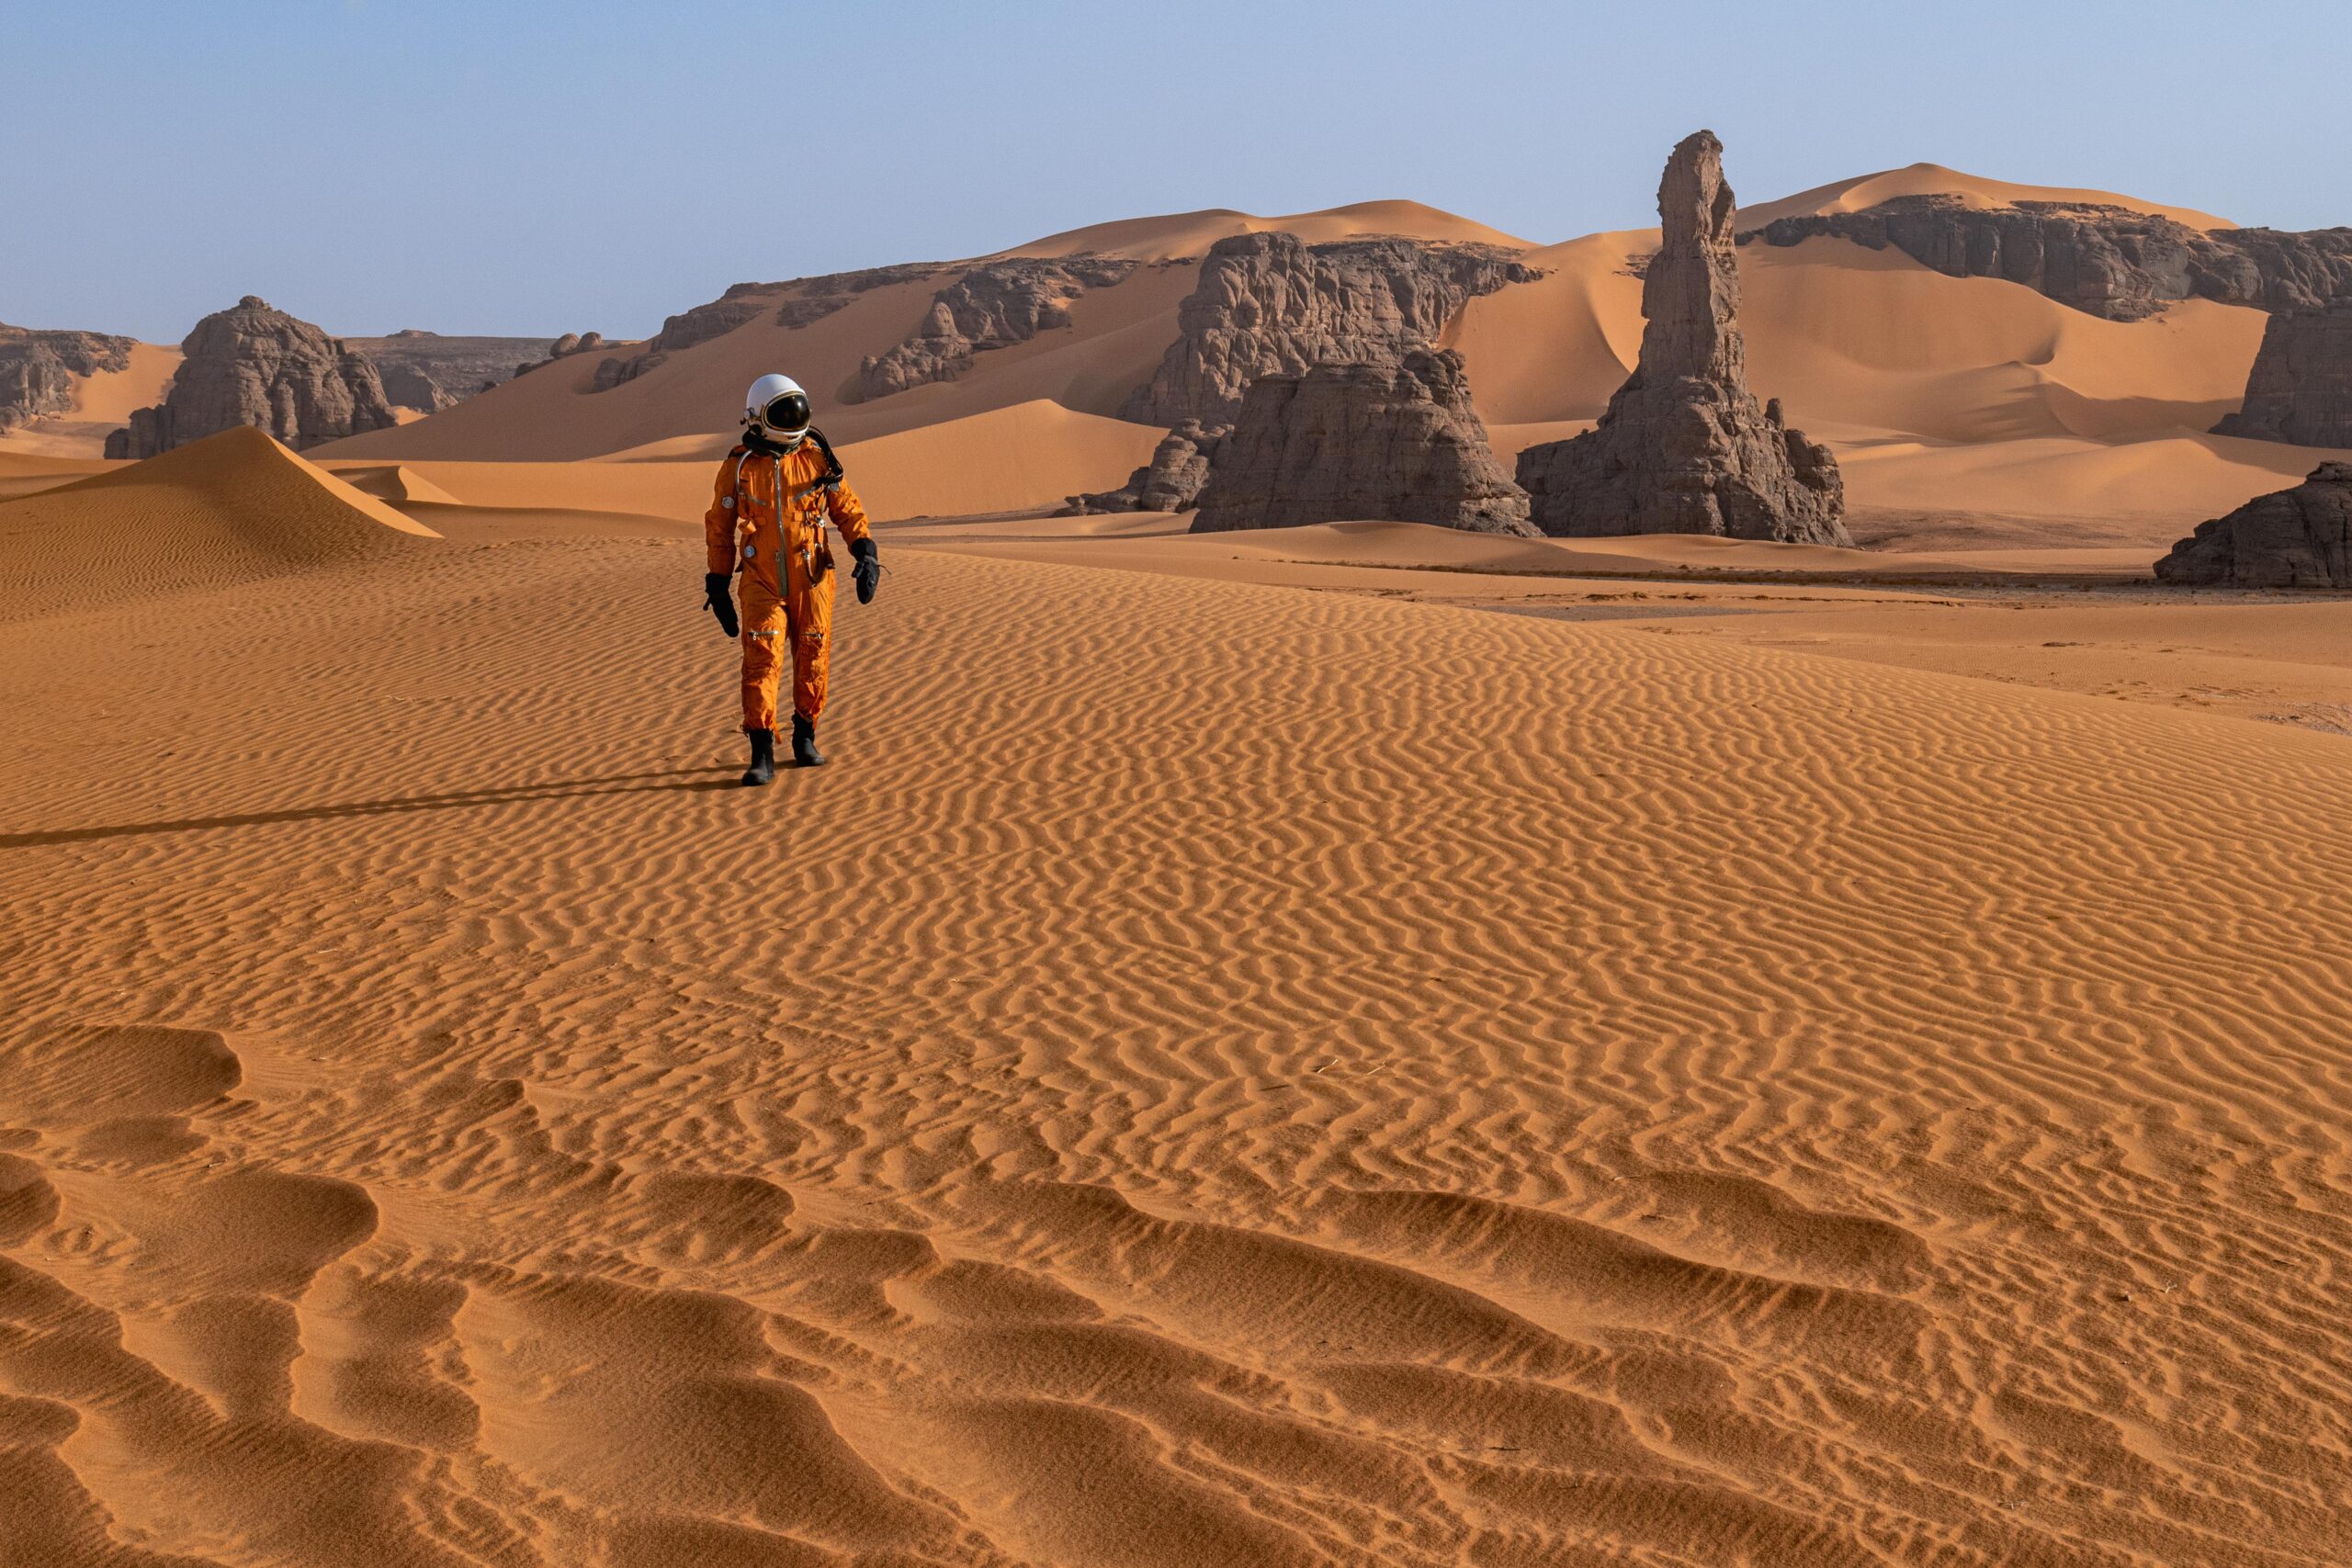 An astronaut walks through the otherworldly sand dunes of the Sahara Desert.